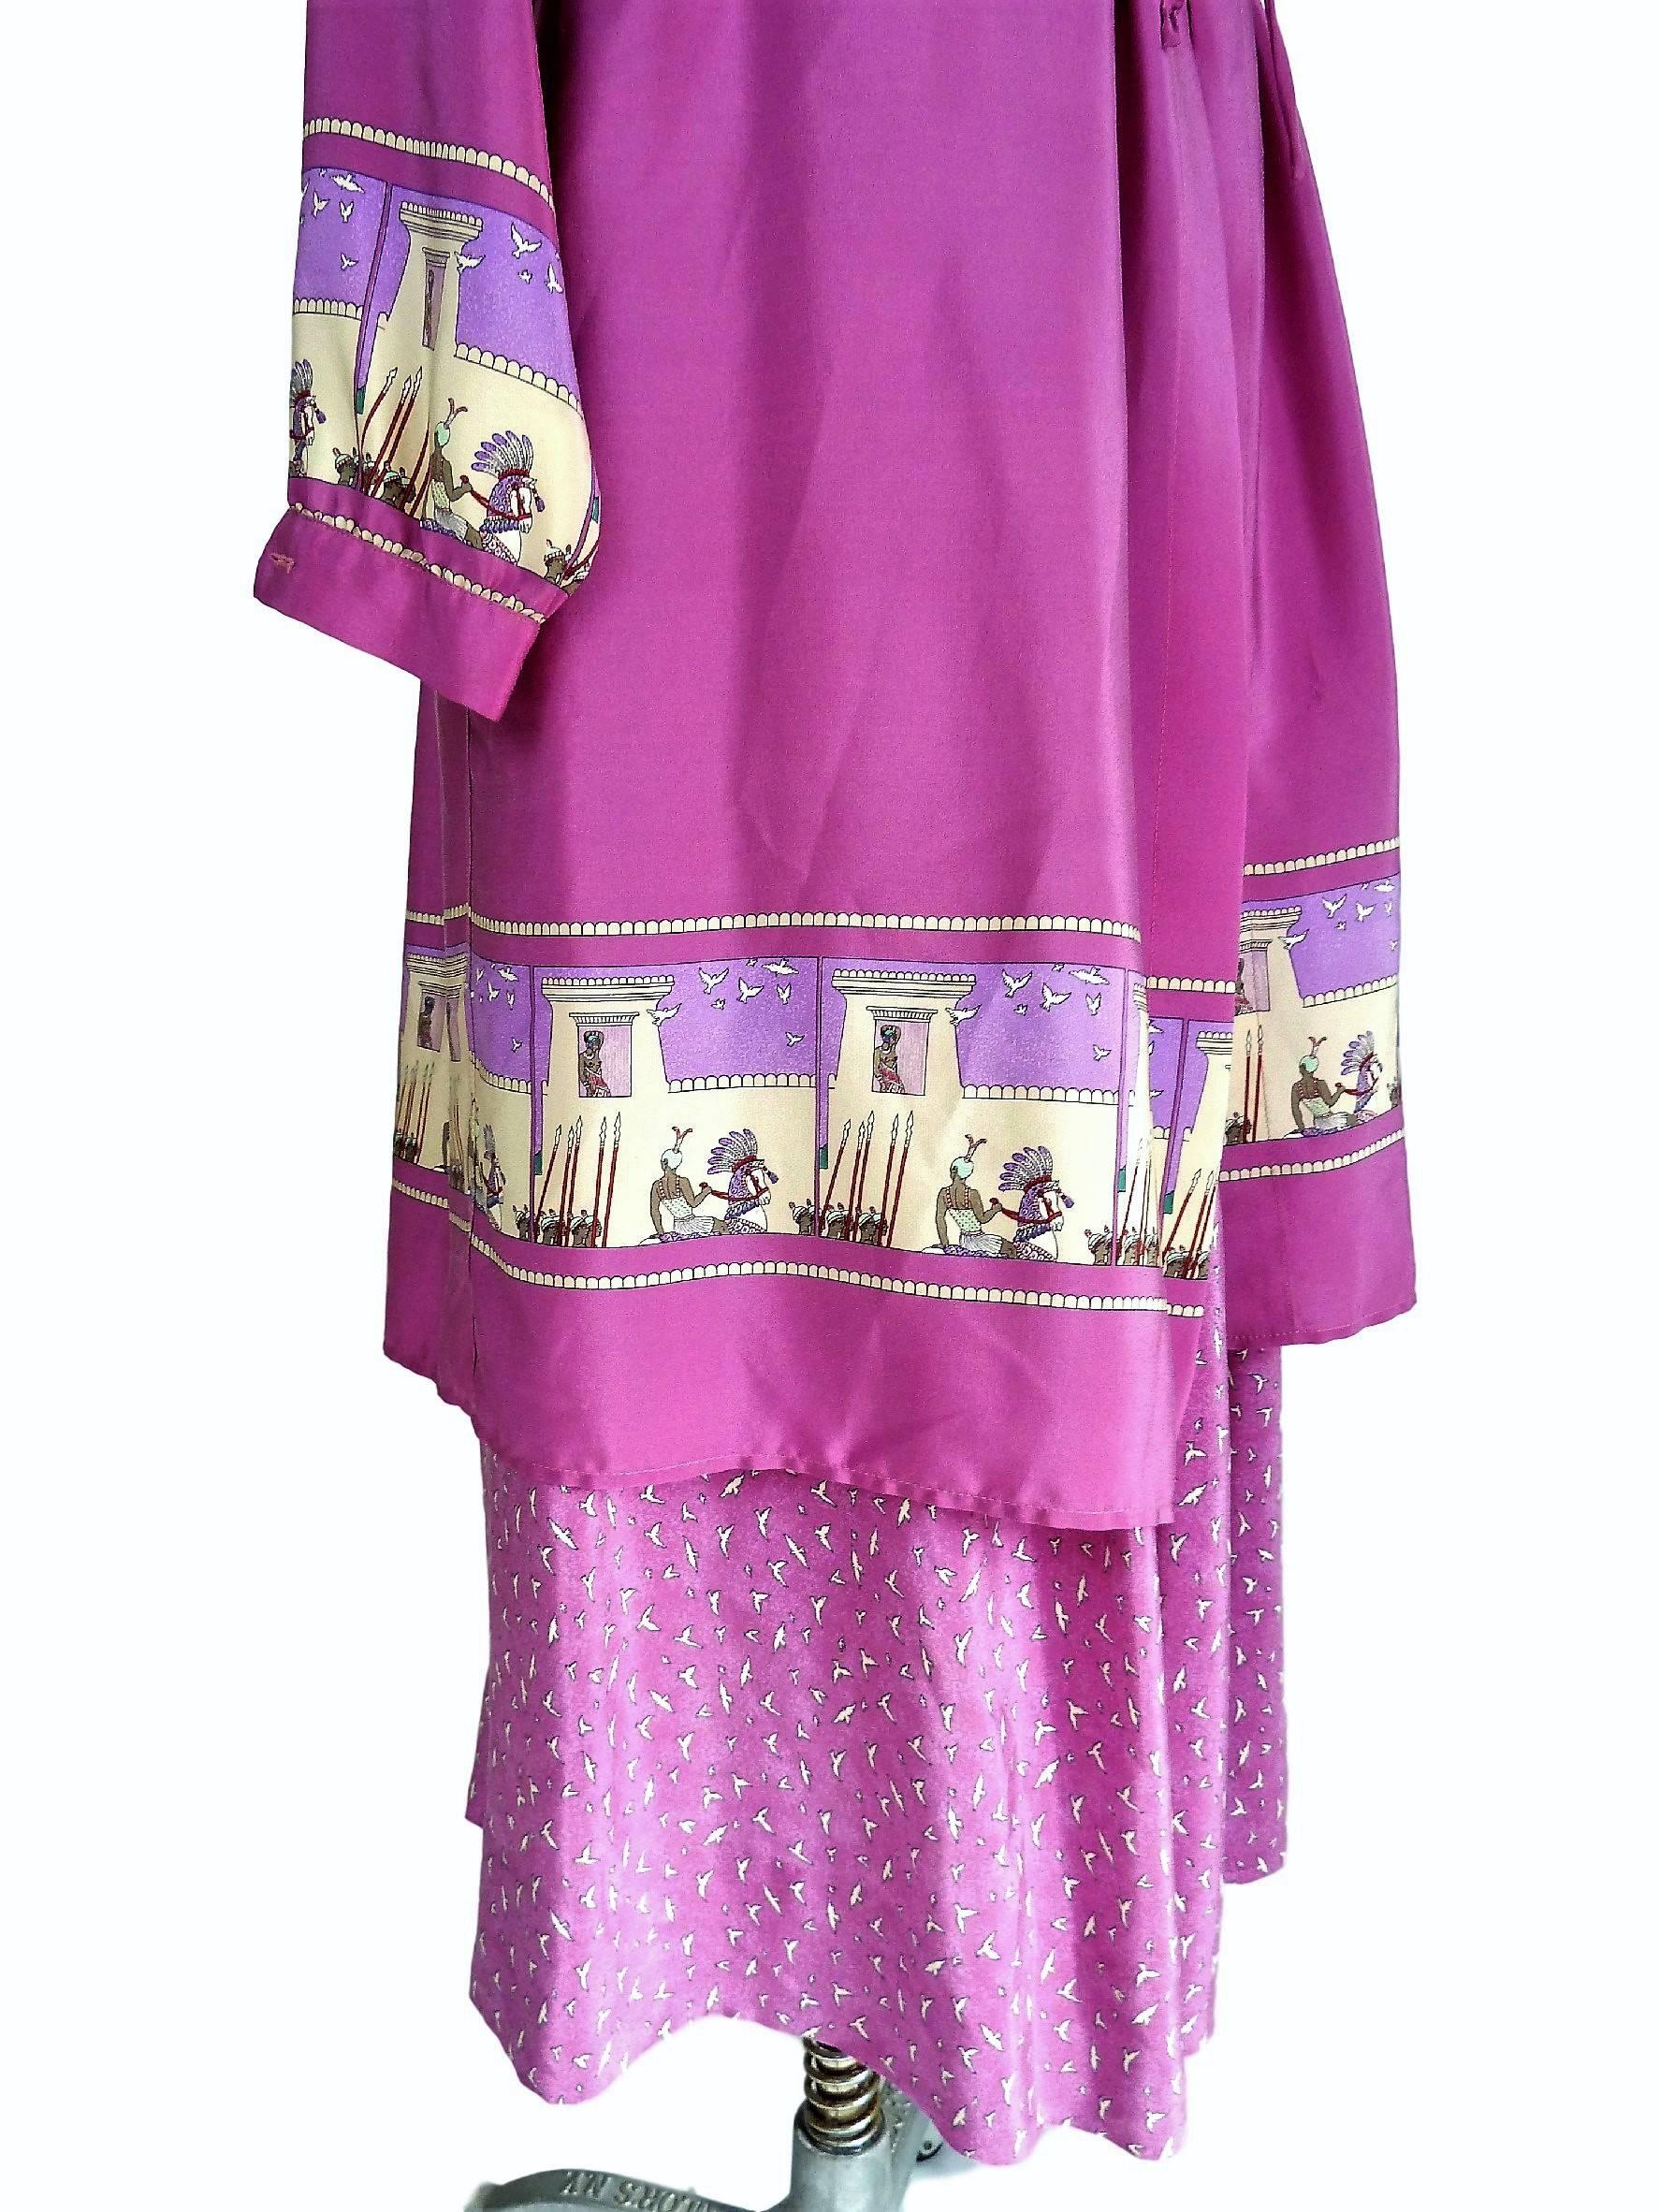 Pink Marina Ferrari 1970s dress set 100% silk jacket blouse and skirt pink size 42 For Sale